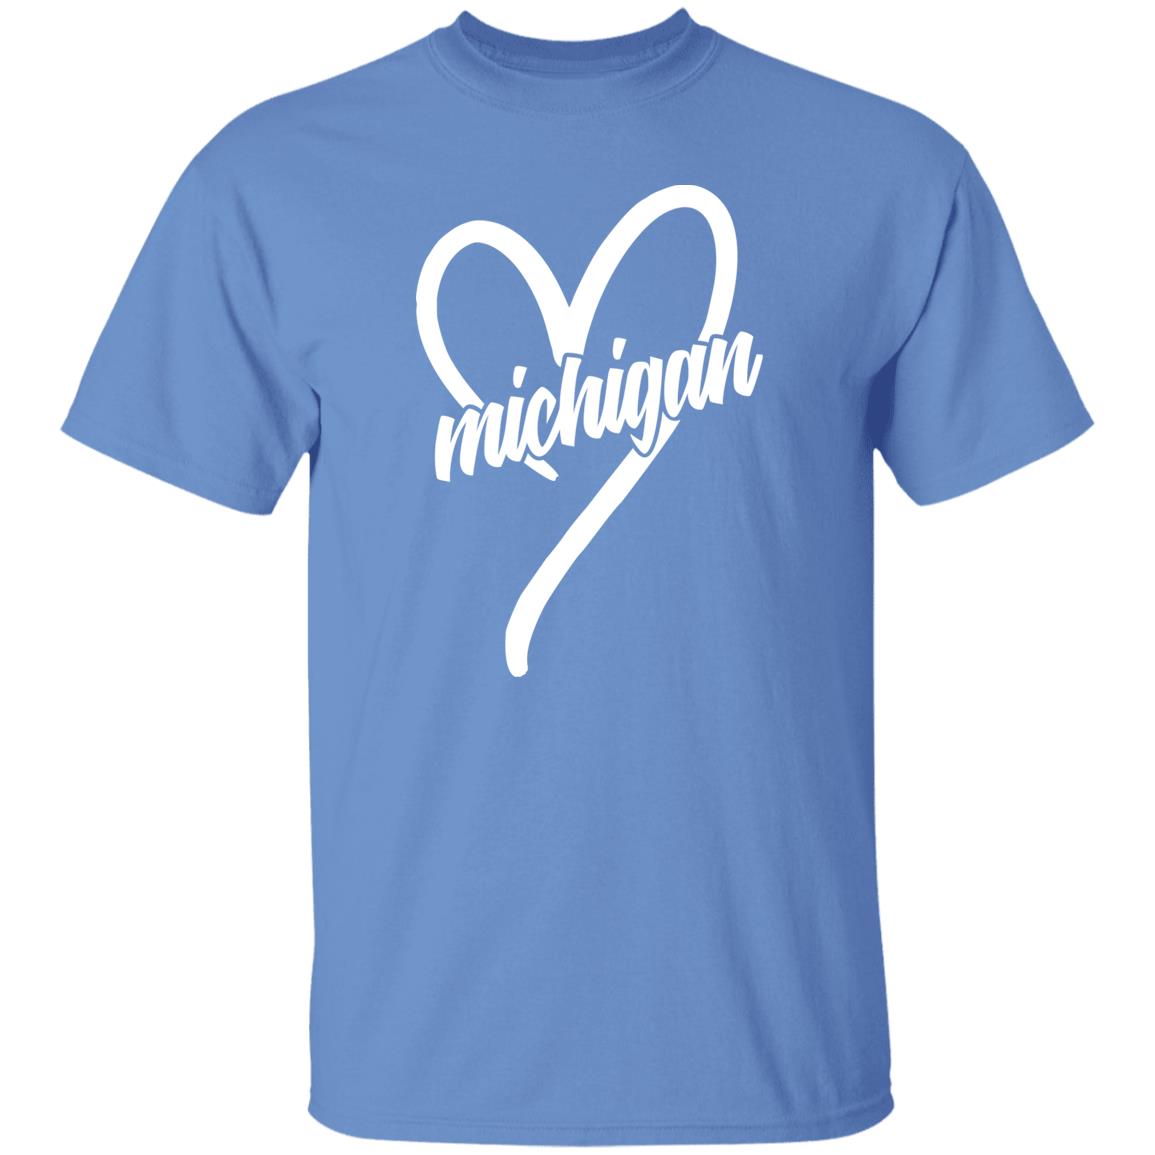 Michigan Heart - White G500 5.3 oz. T-Shirt